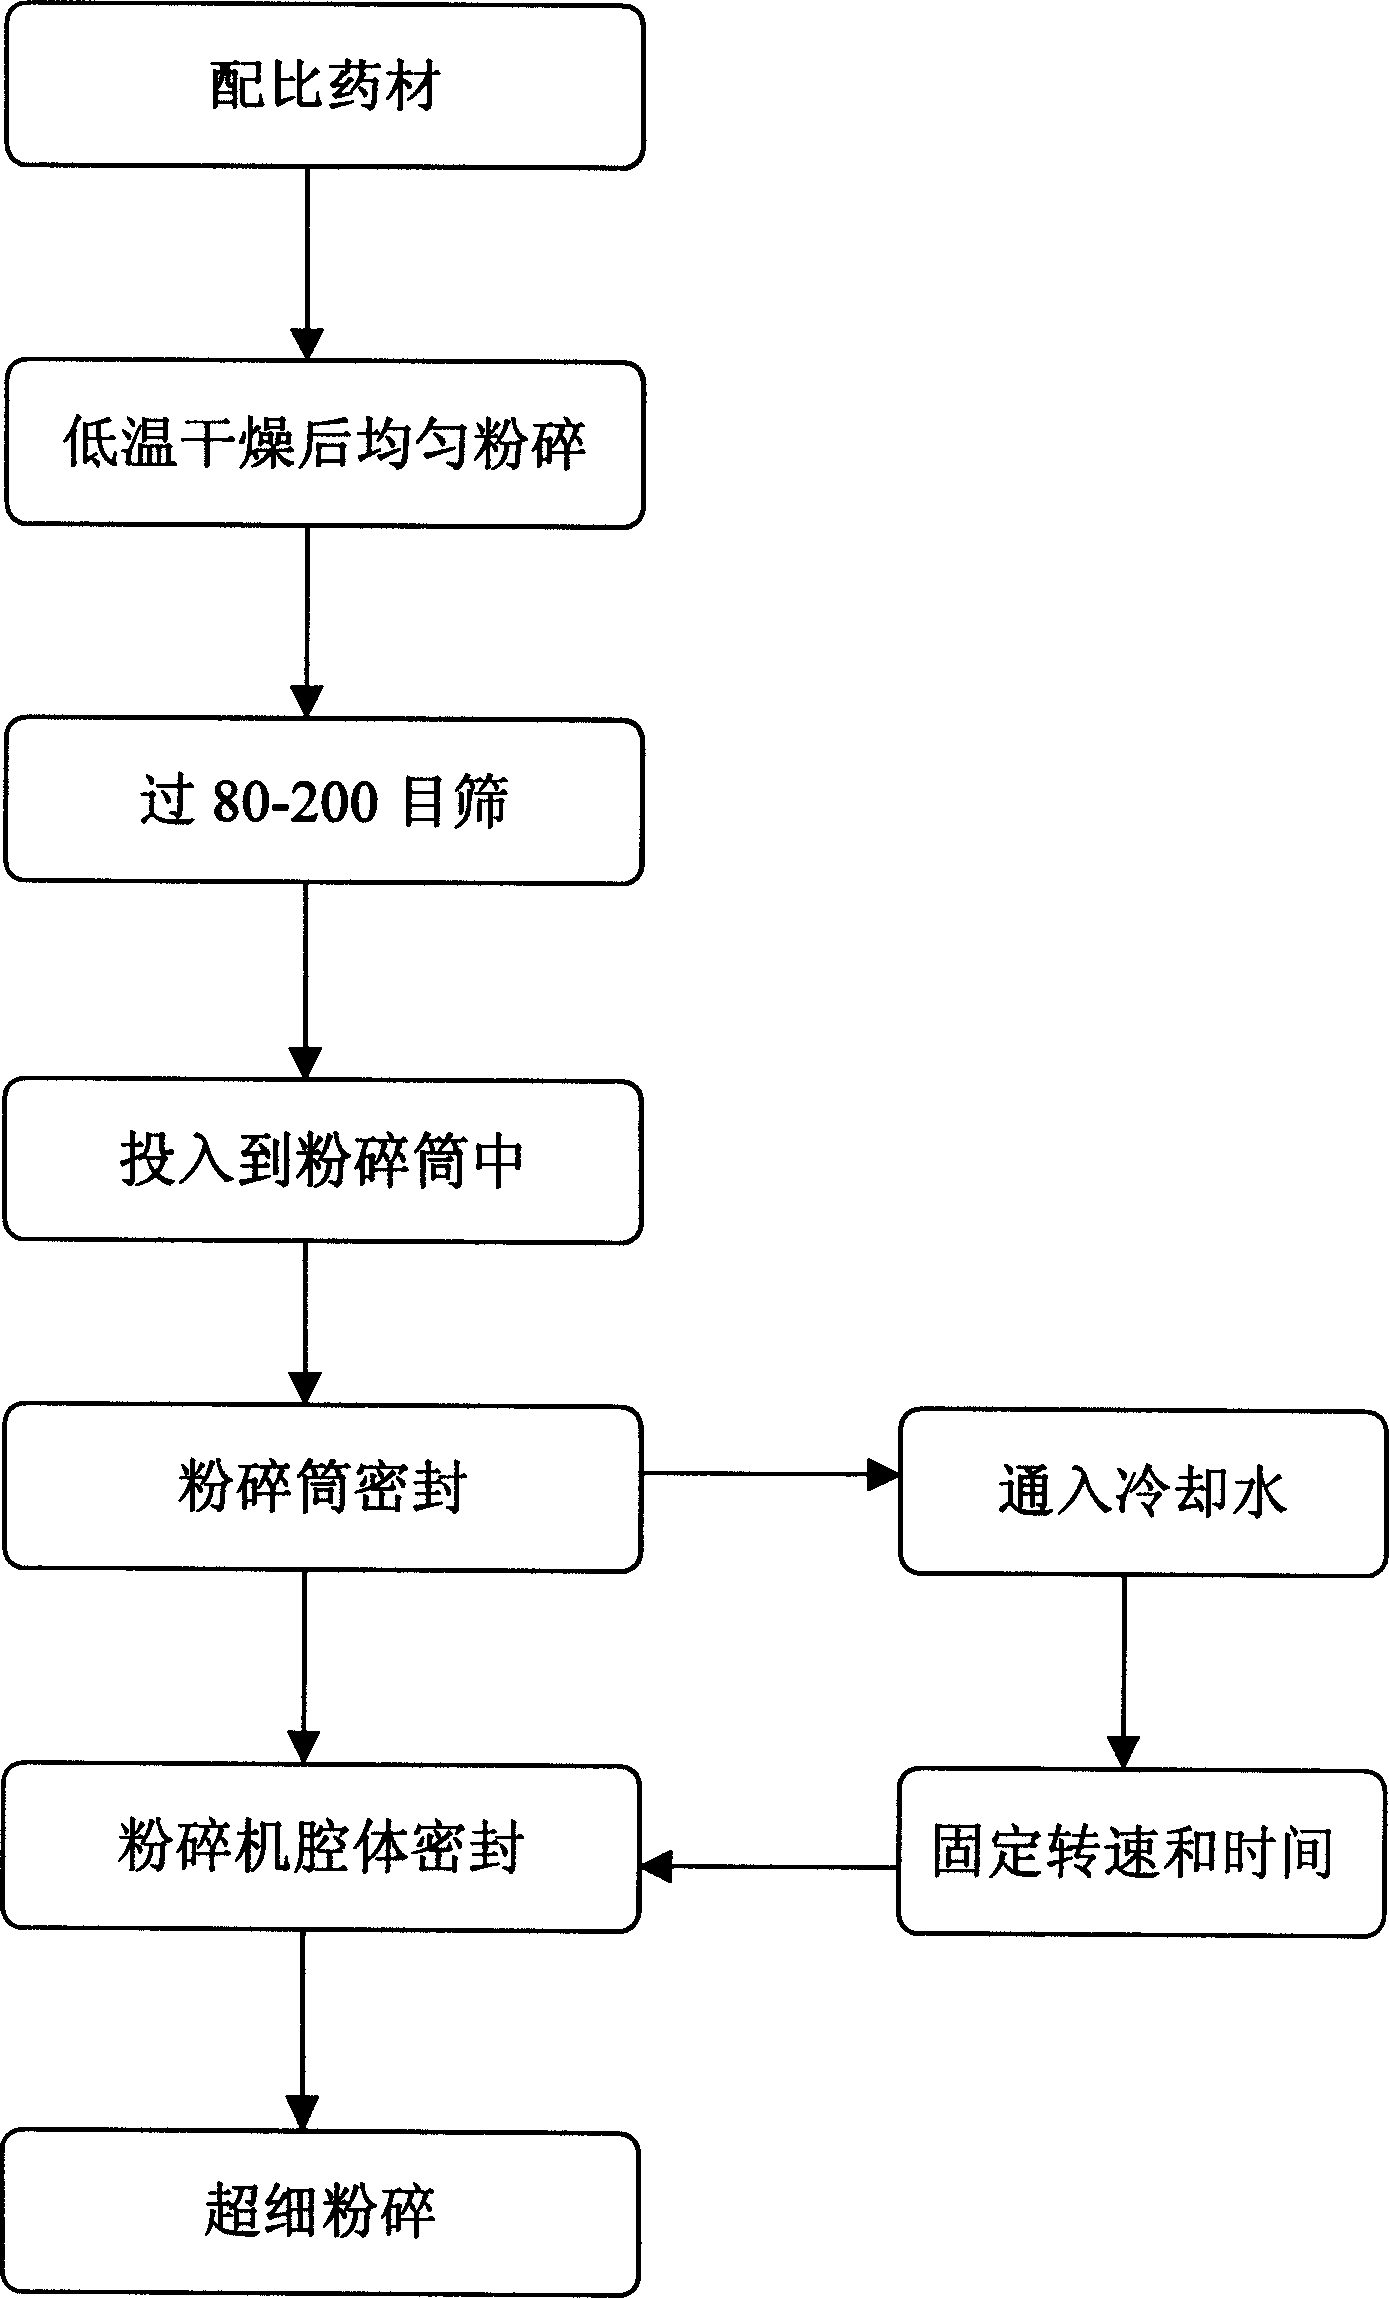 Method for nano plant Chinese medicine